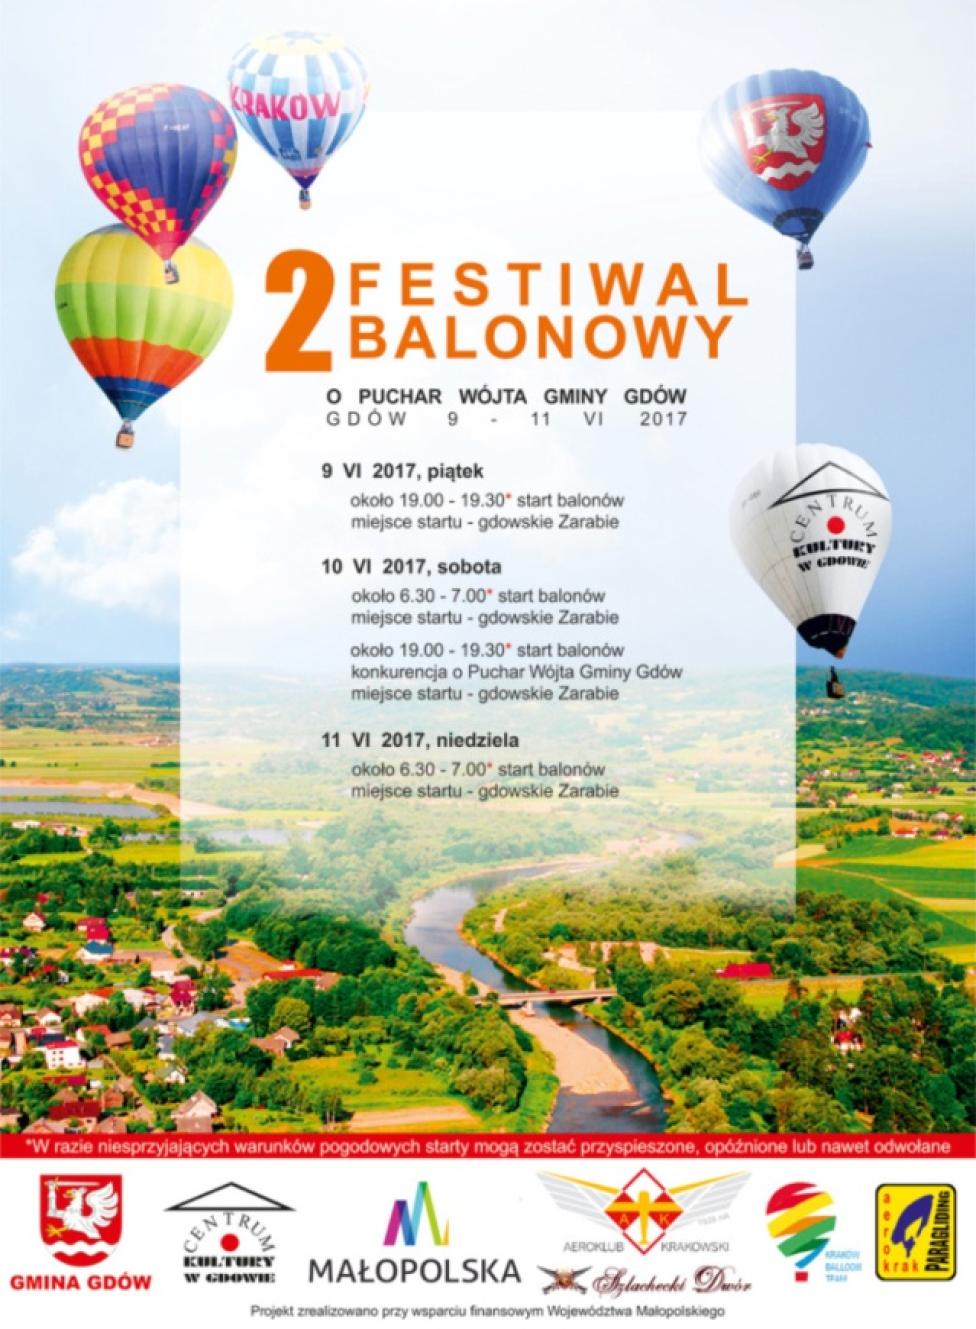 2 Festiwal Balonowy o Puchar Wójta Gminy Gdów (fot. aeroklubkrakowski.pl)